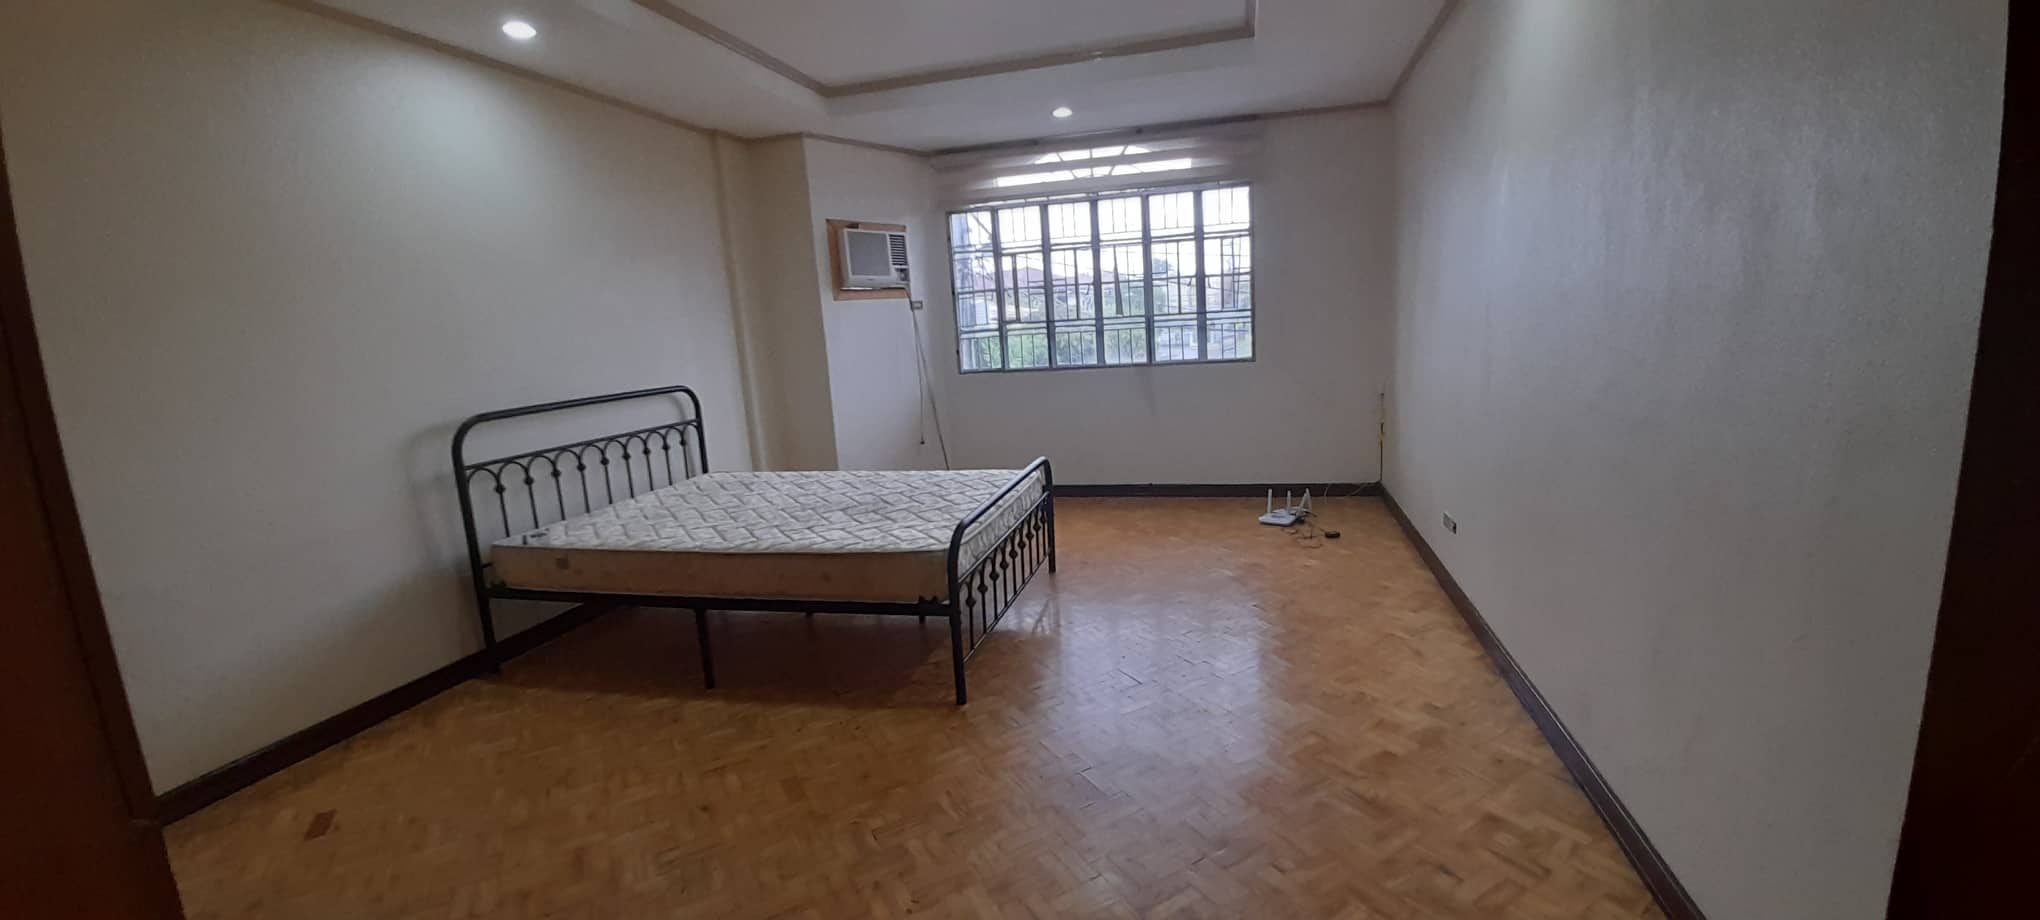 5-bedroom-townhouse-or-apartment-in-hernan-cortes-ave-mandaue-city-cebu